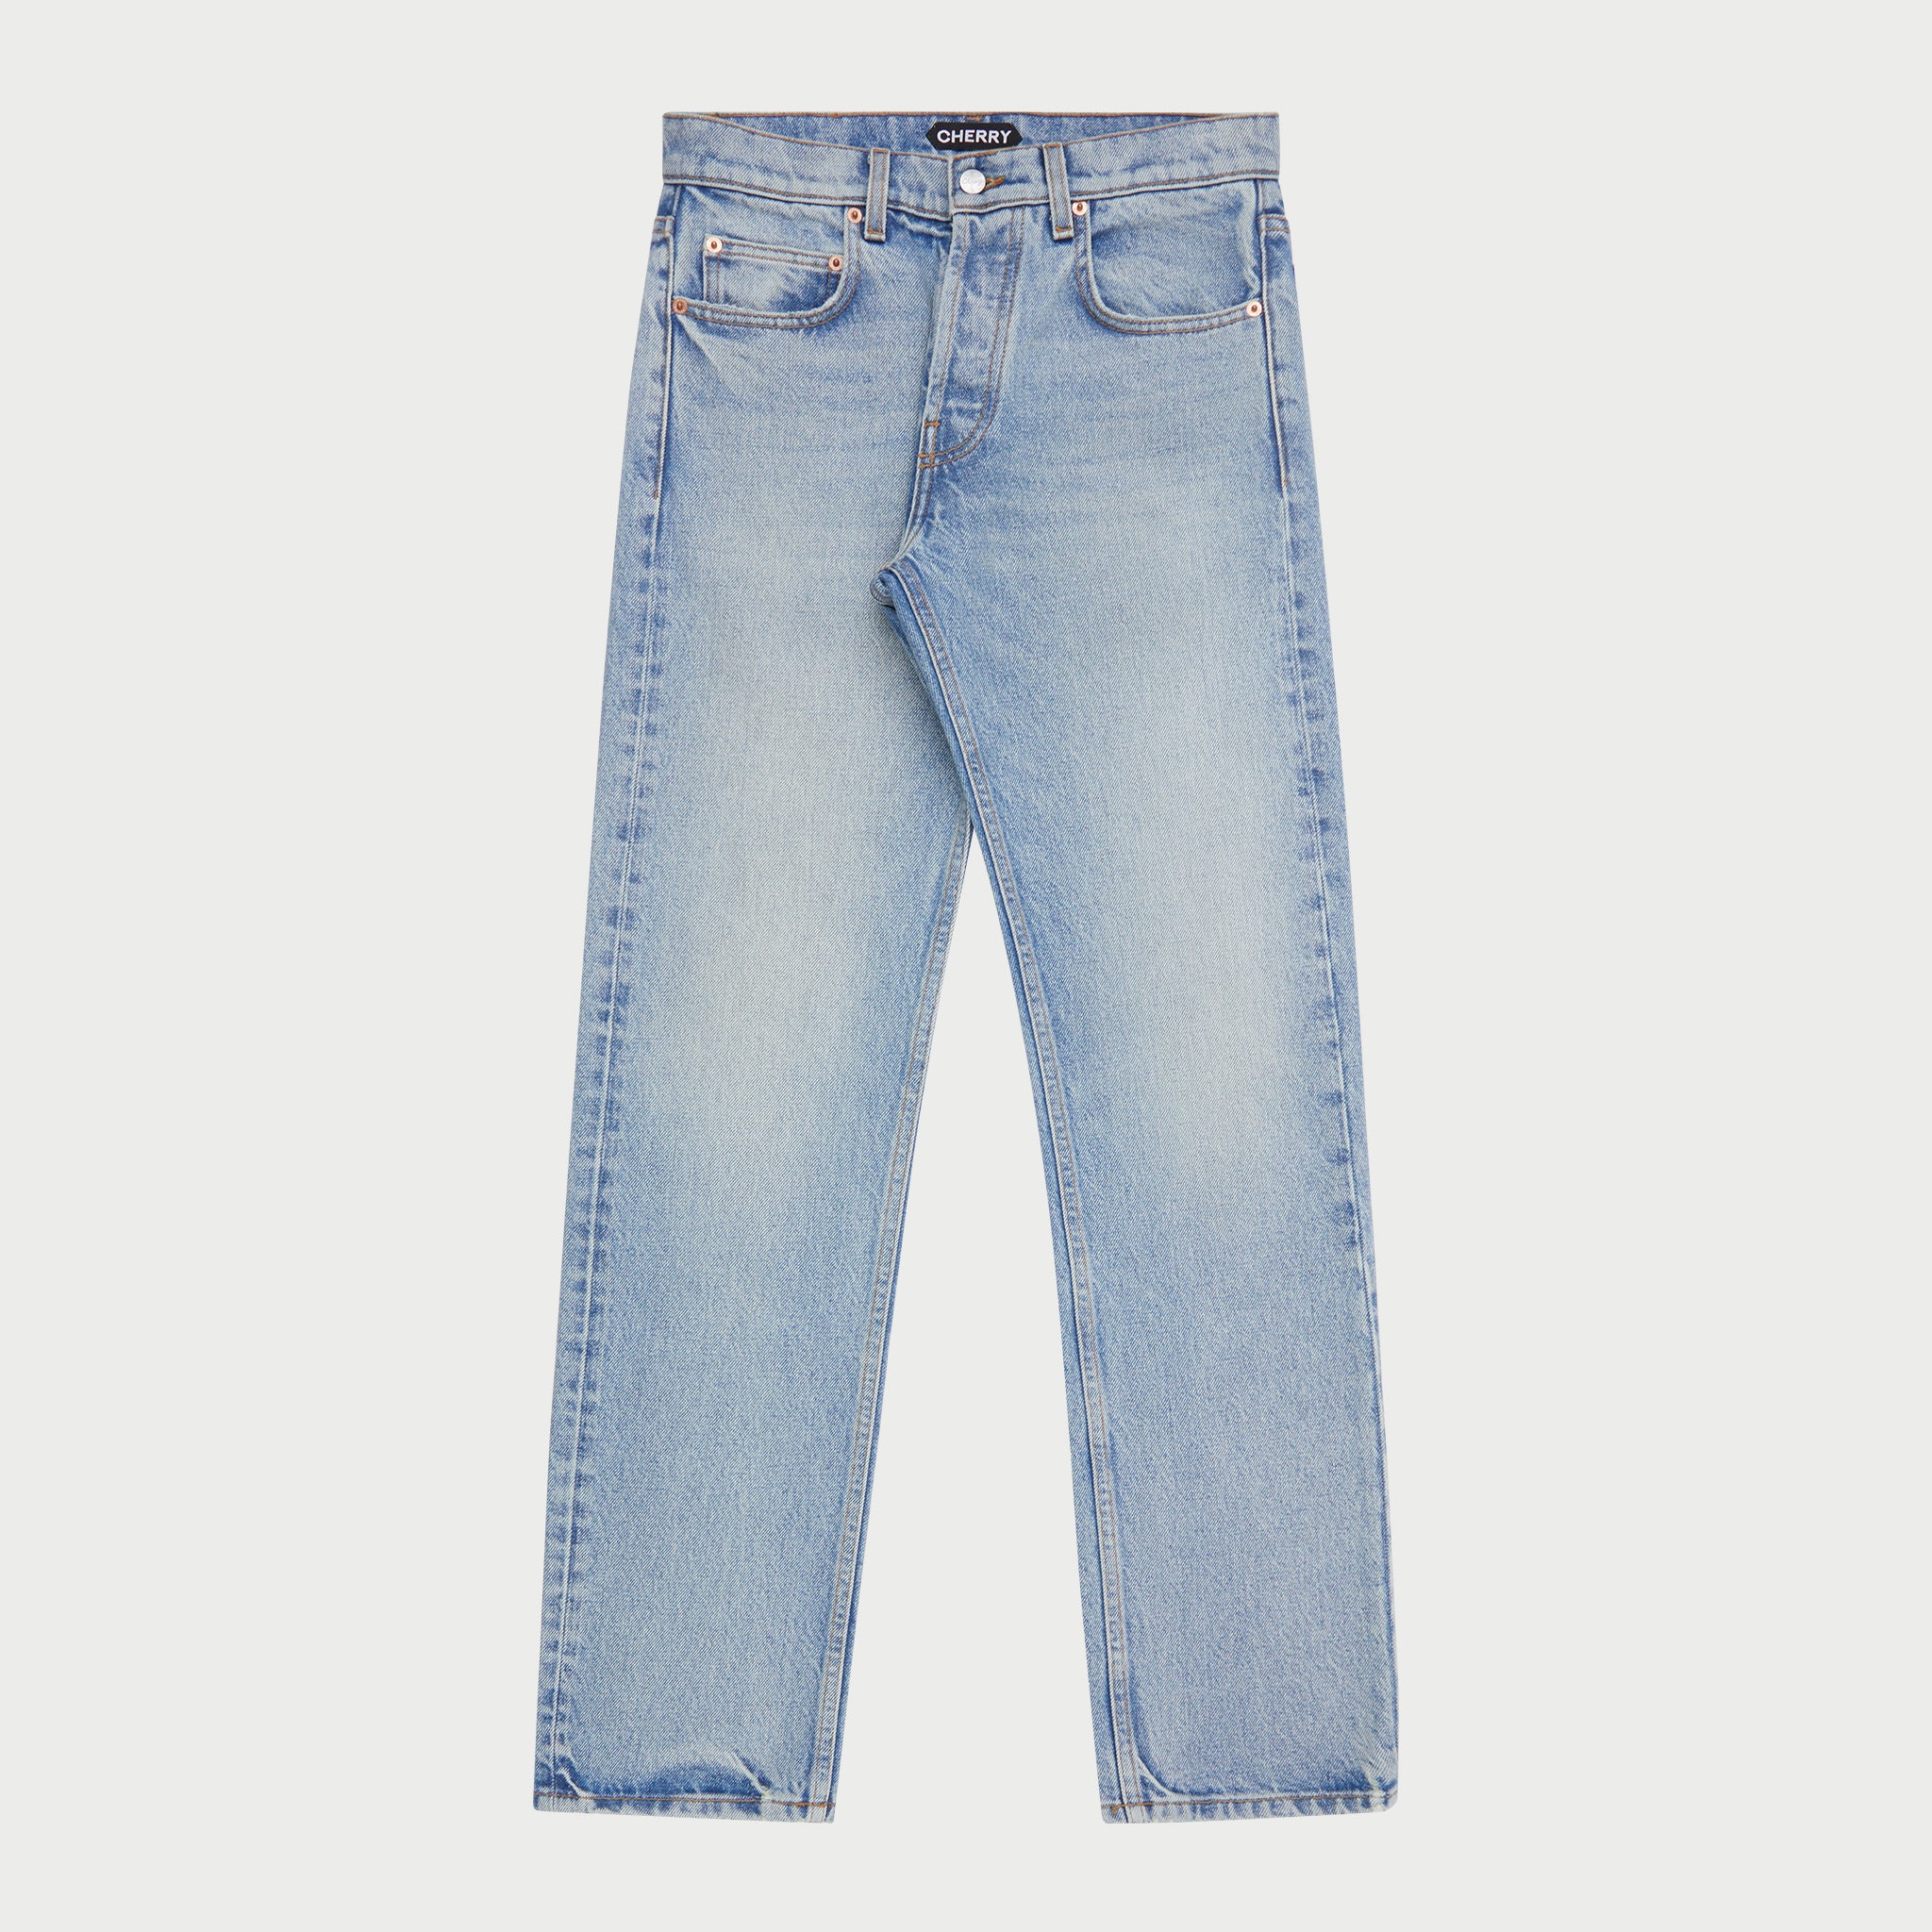 Straight Leg 5 Pocket Denim Jeans (George Wash)